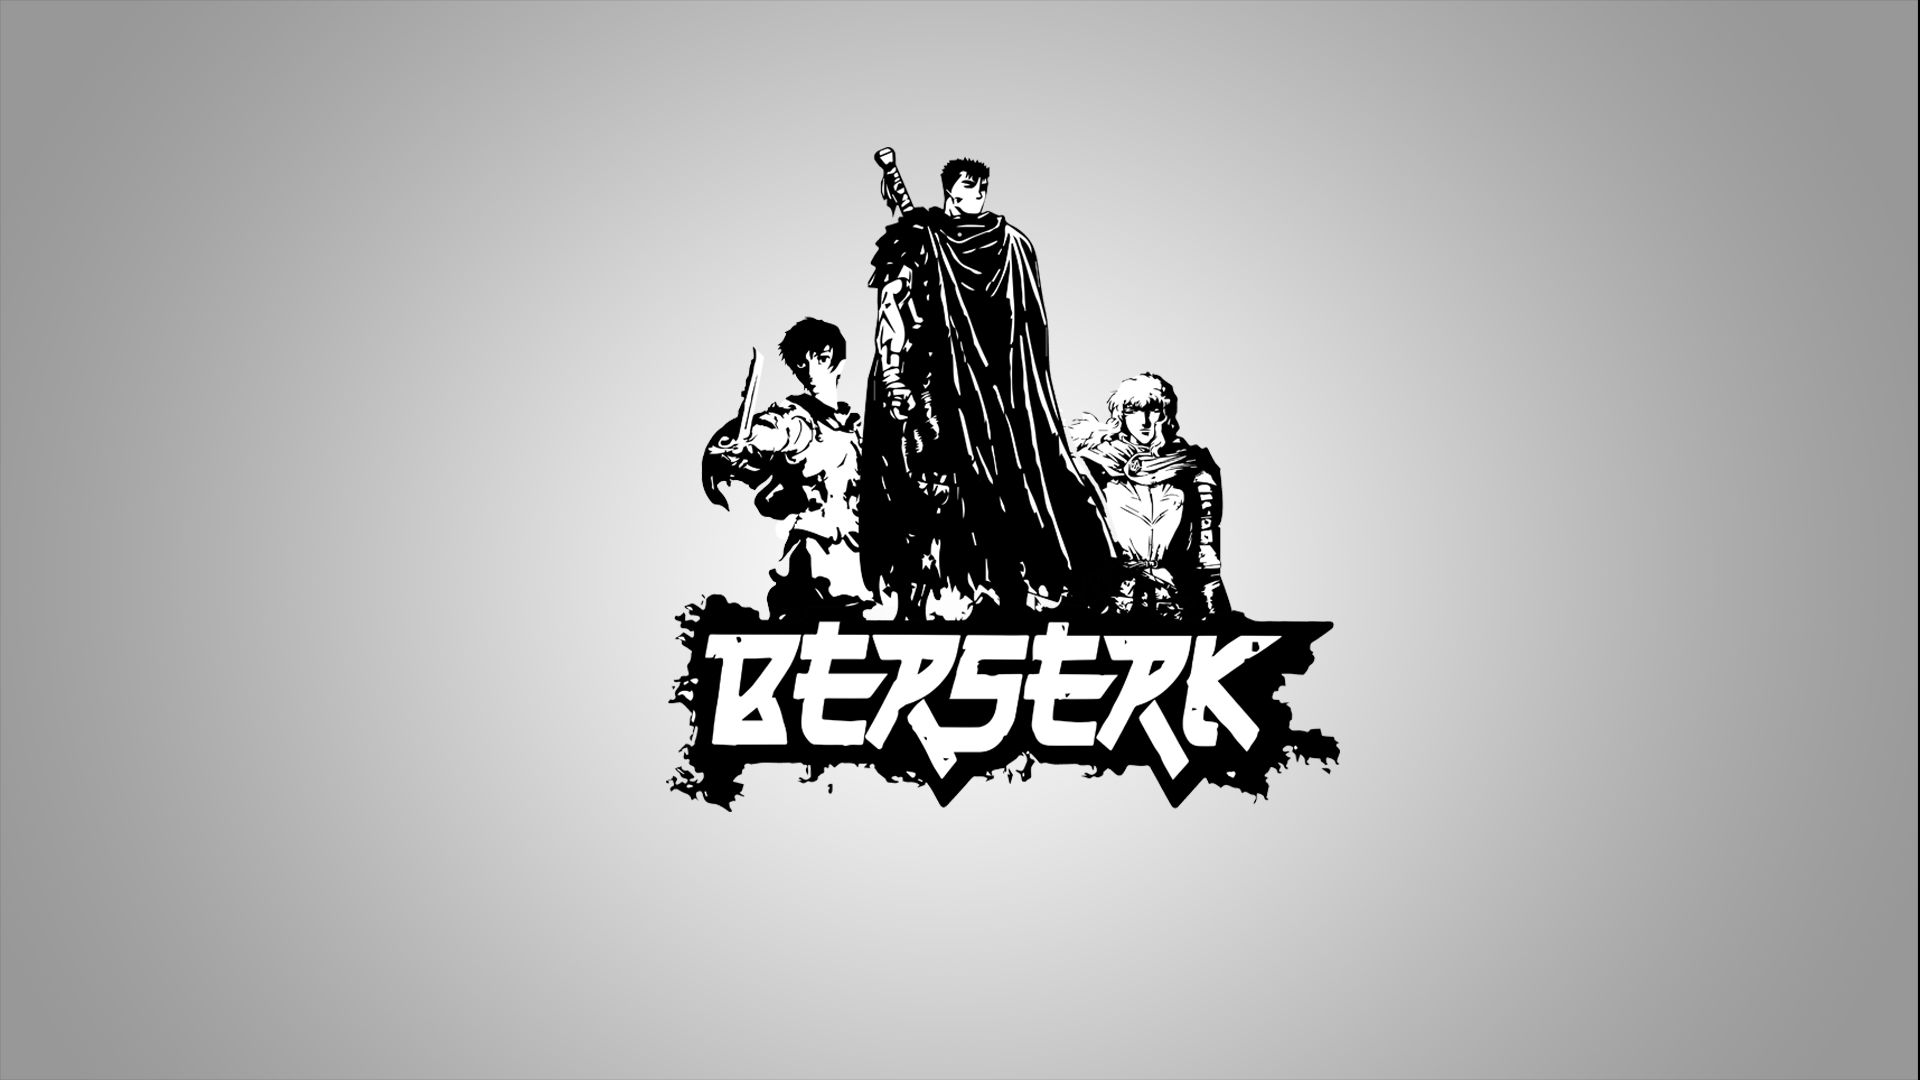 berserk, griffith (berserk), anime, casca (berserk), guts (berserk)